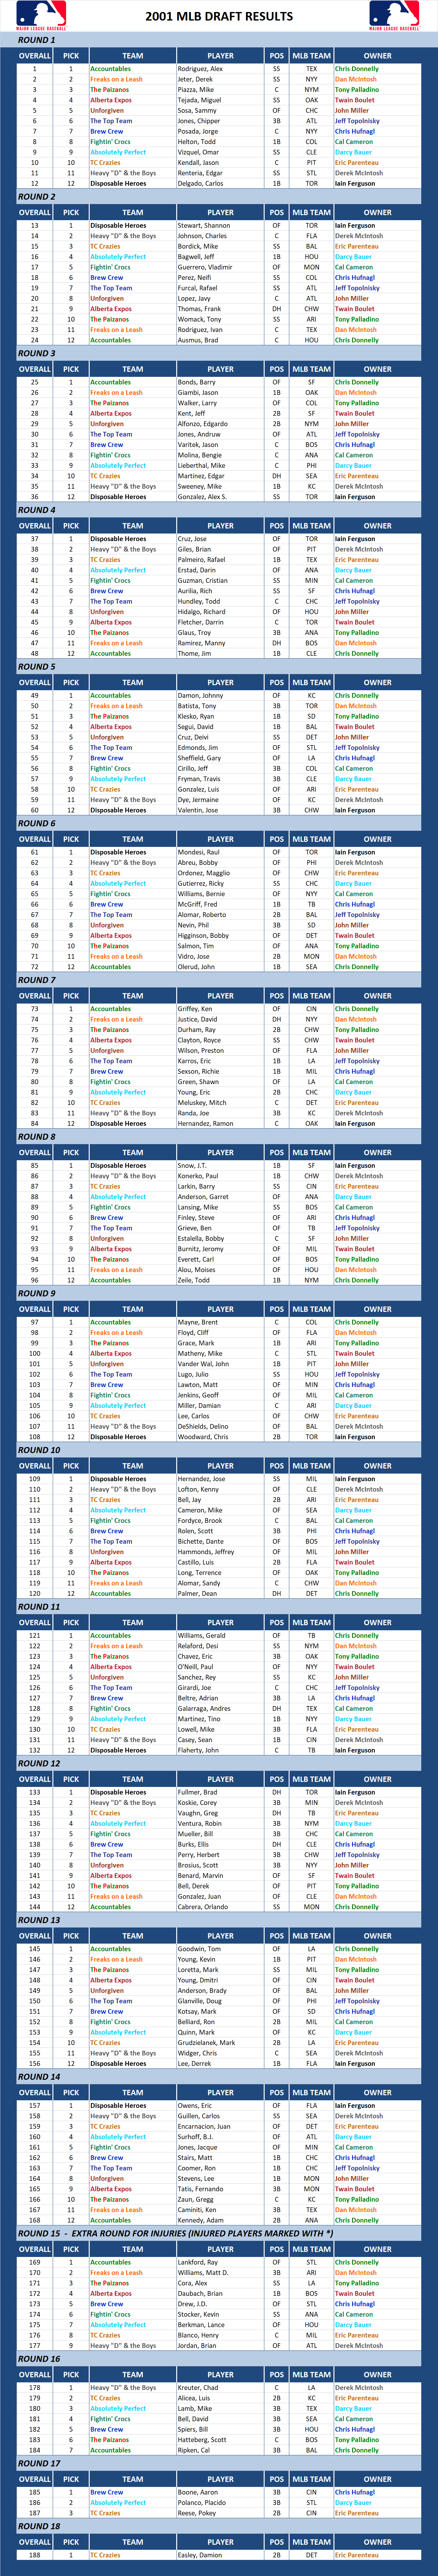 2001 Major league Baseball Draft Results